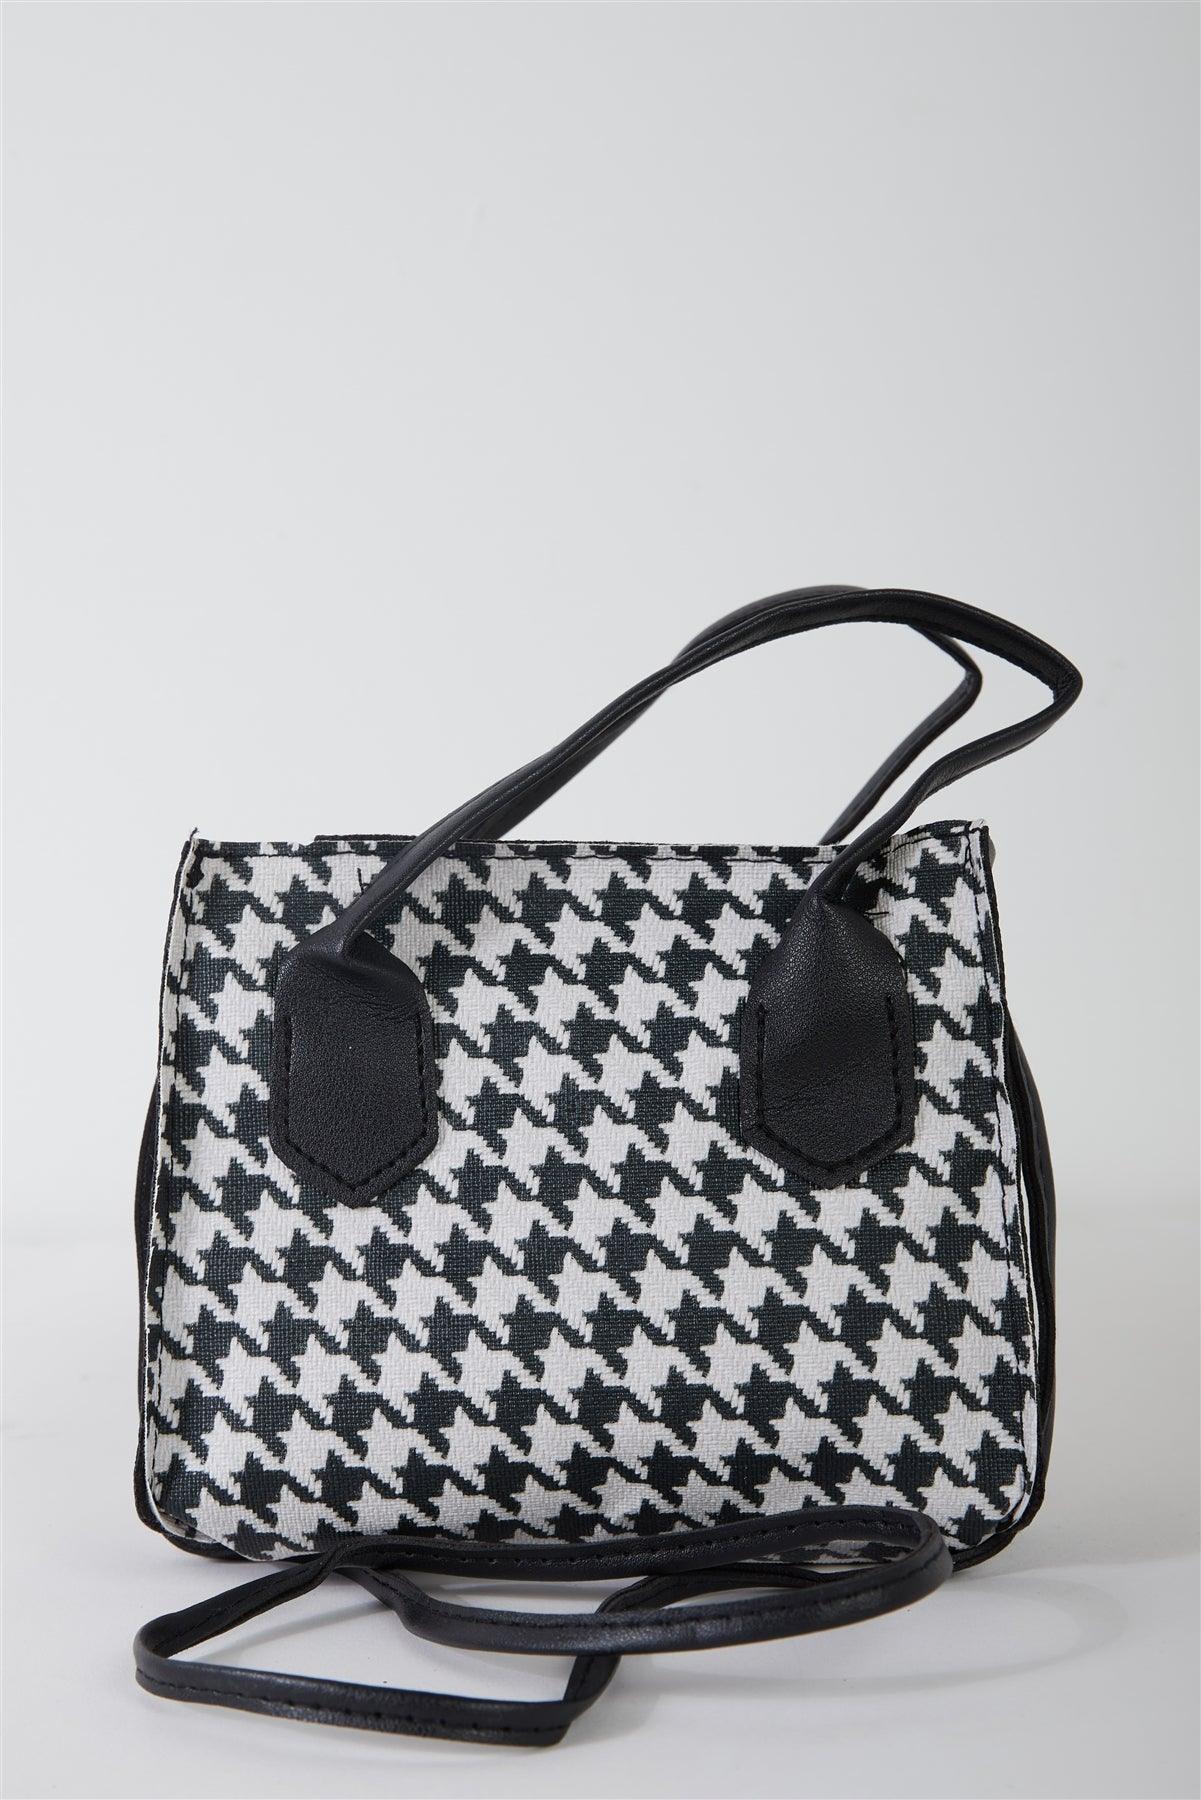 Black & White Houndstooth Print Two Handles Small Handbag /3 Bags